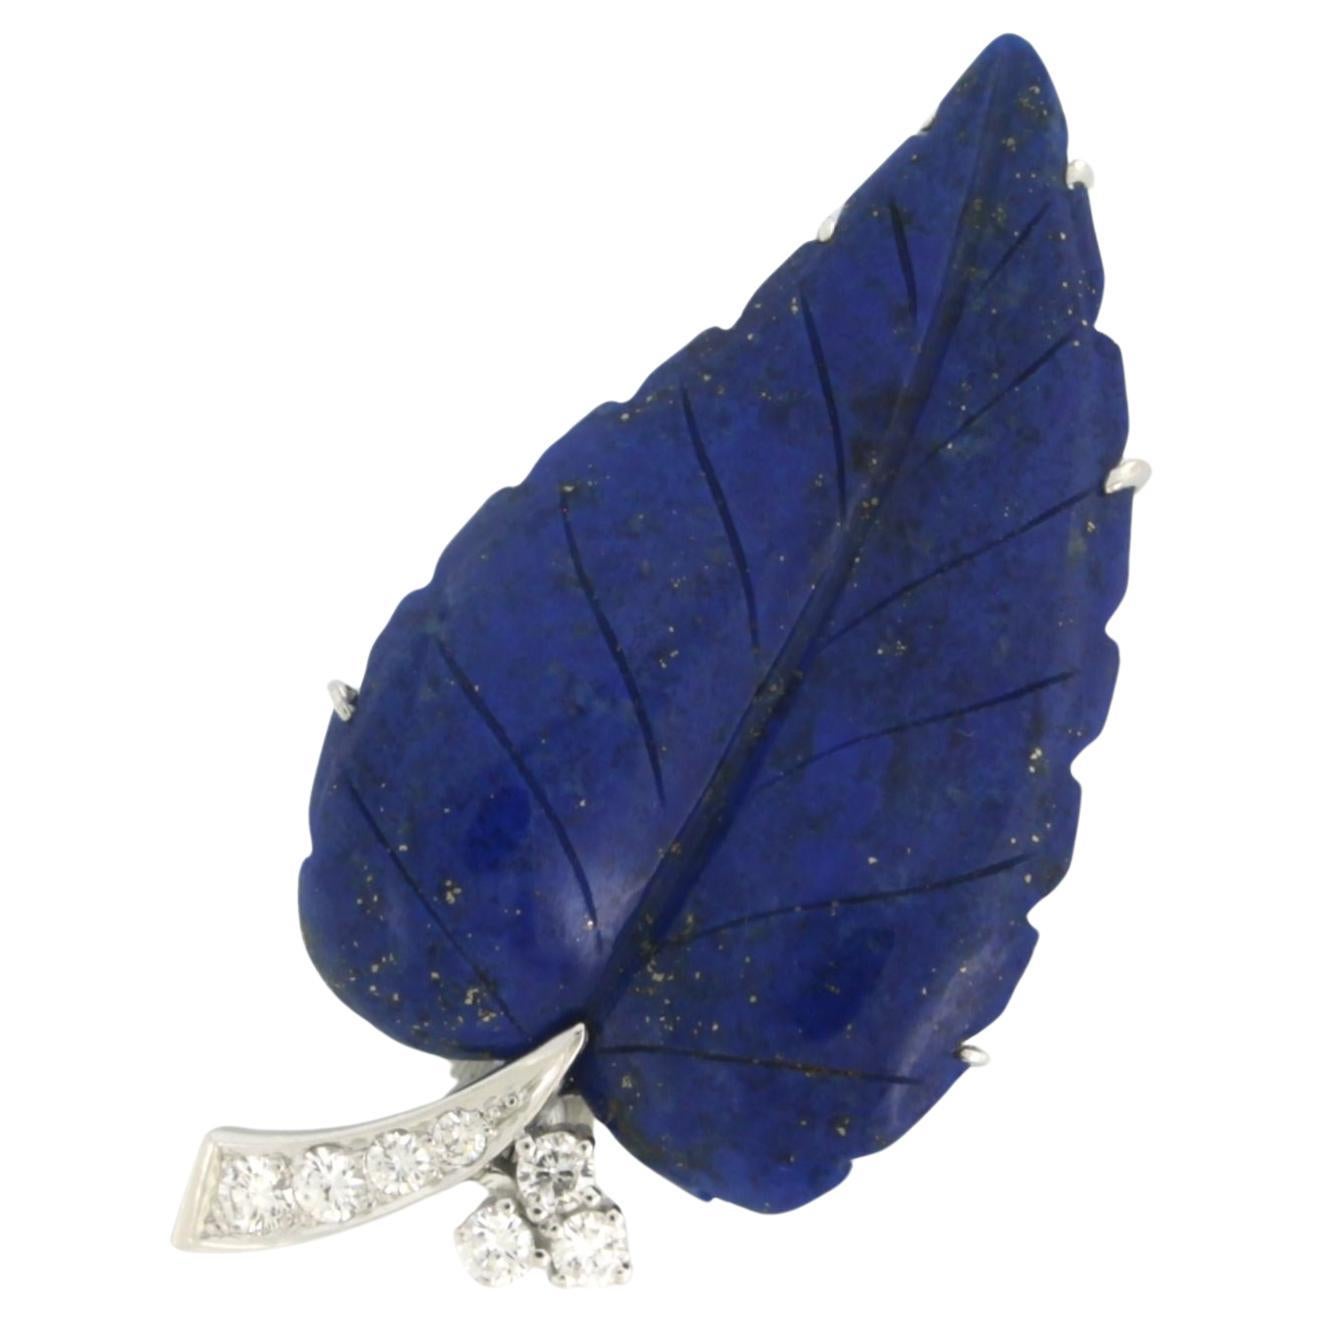 Brooch Lapis Lazuli leaf shape set with Diamonds, 18k white gold